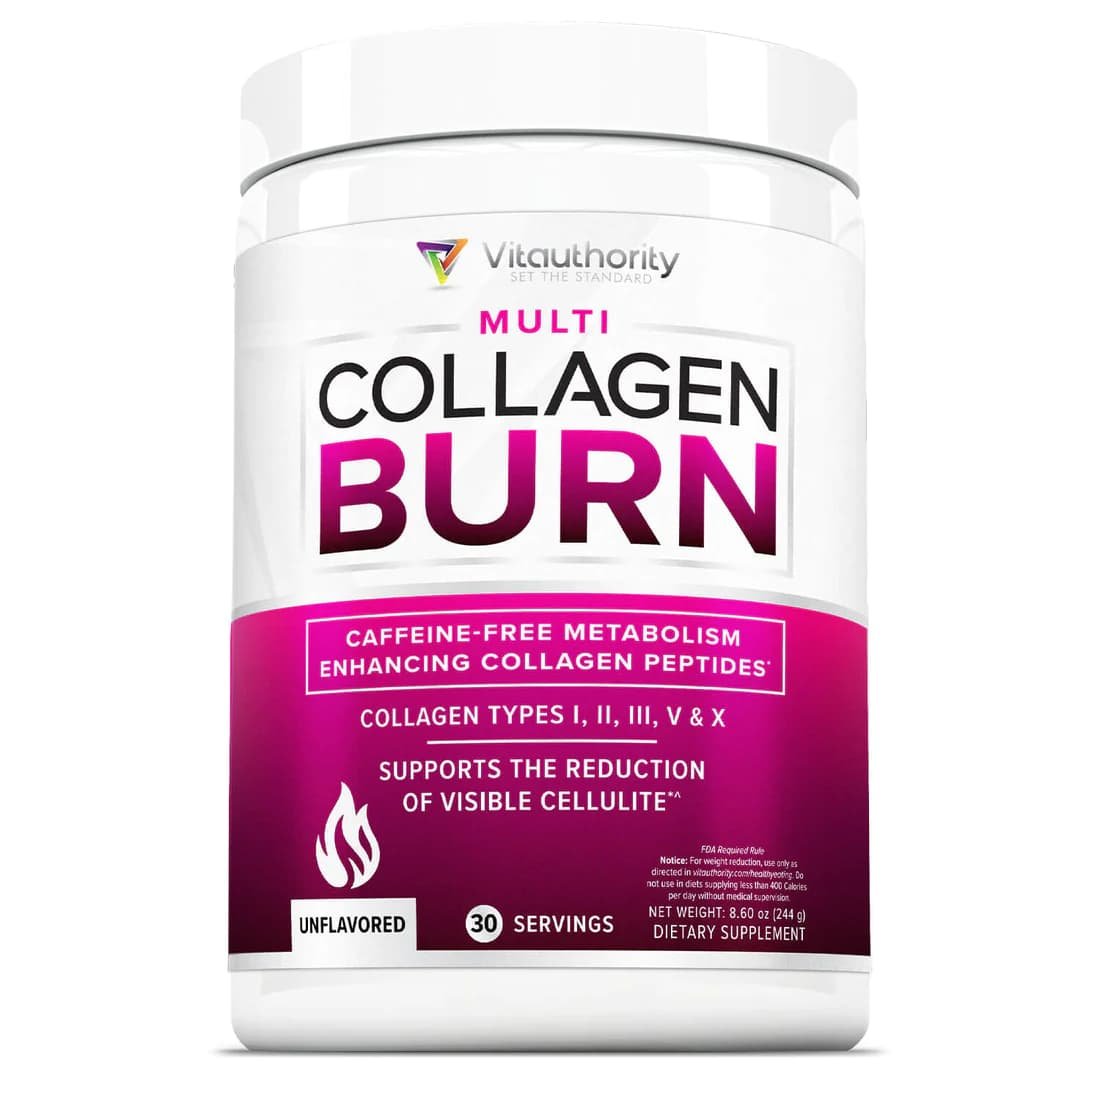 Vitauthority Multi Collagen Burn Powder